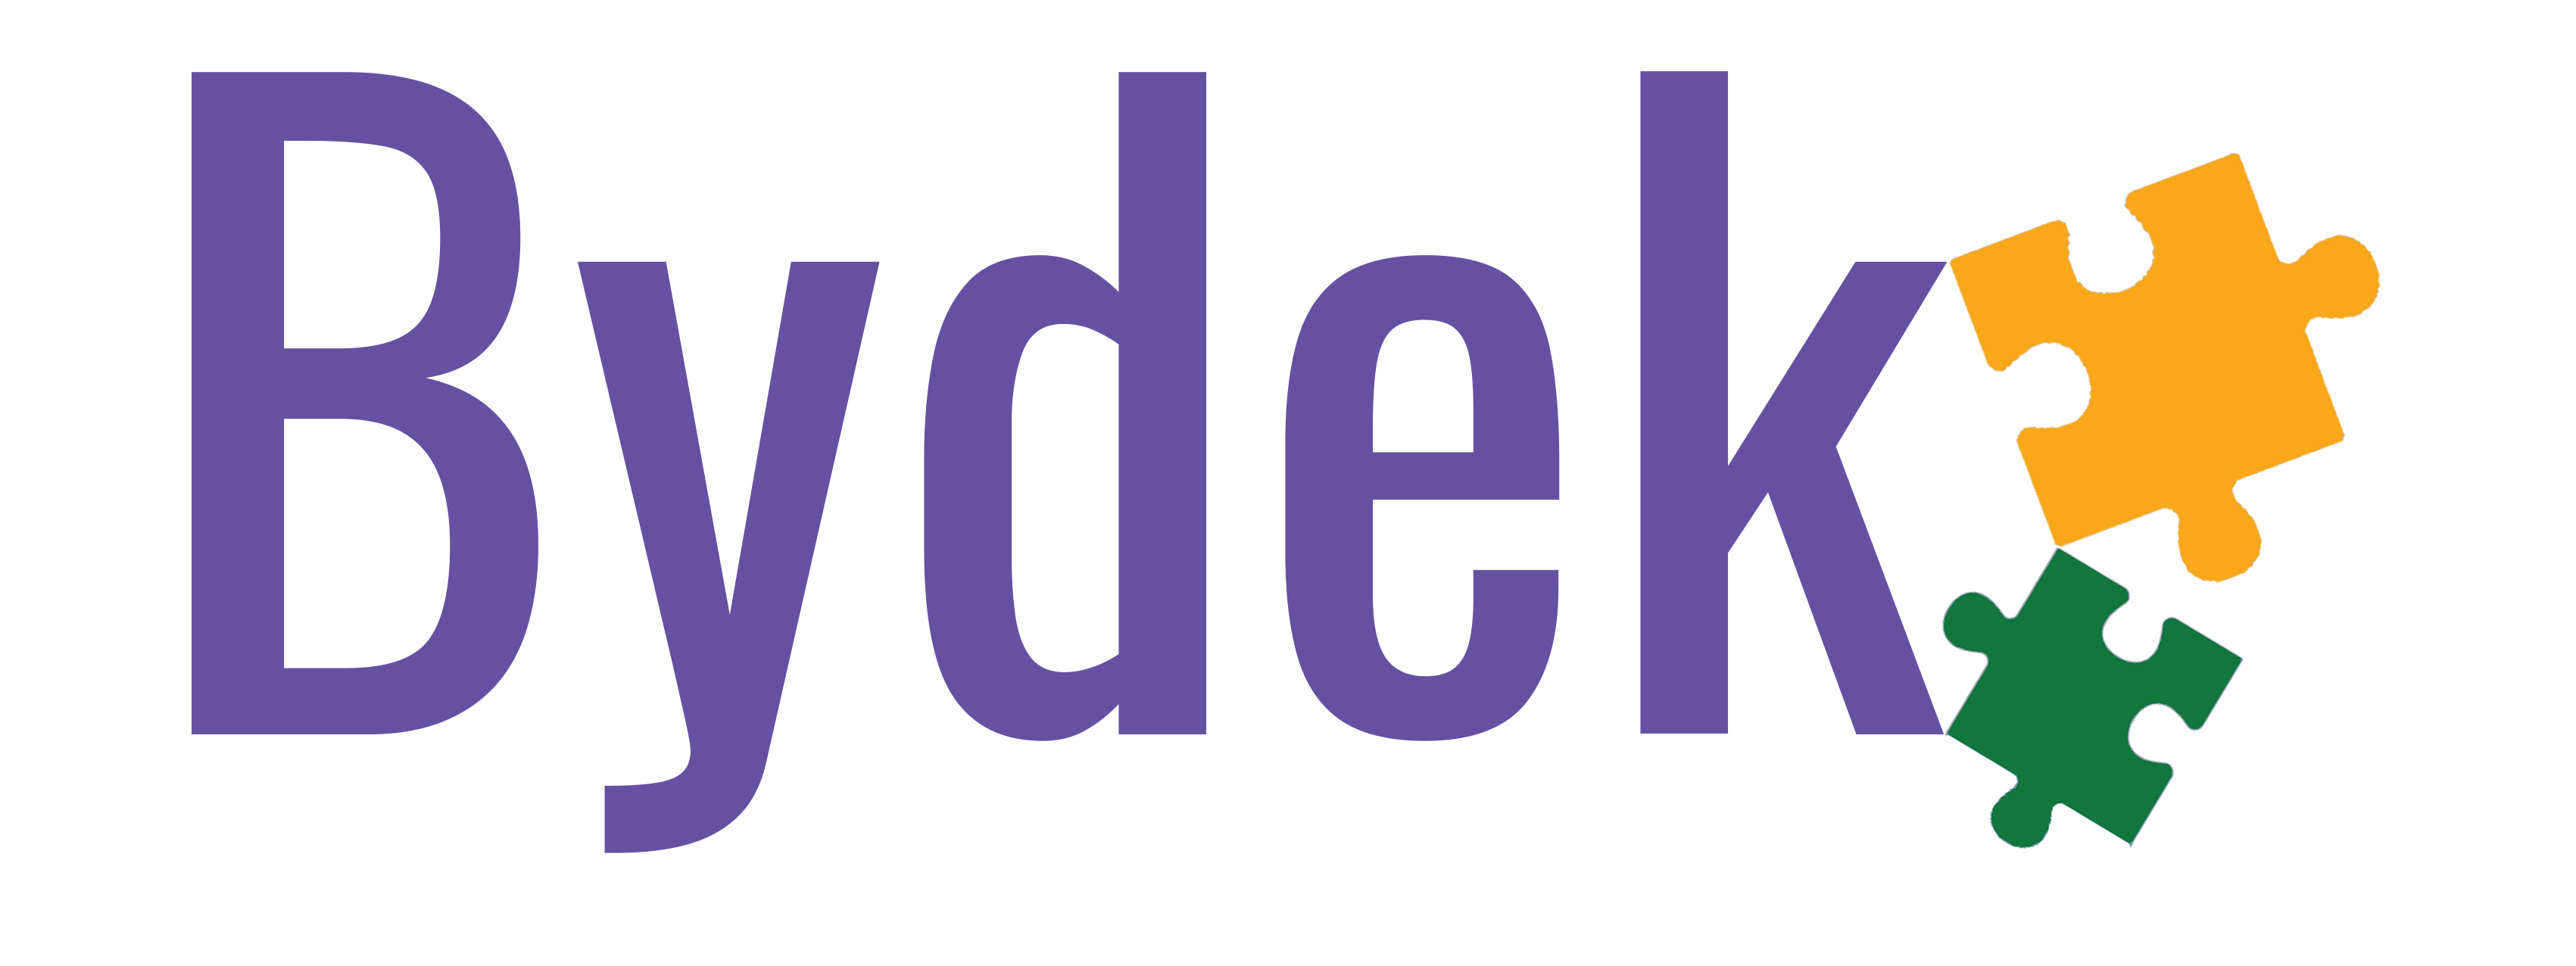 Bydek Channel Data Management